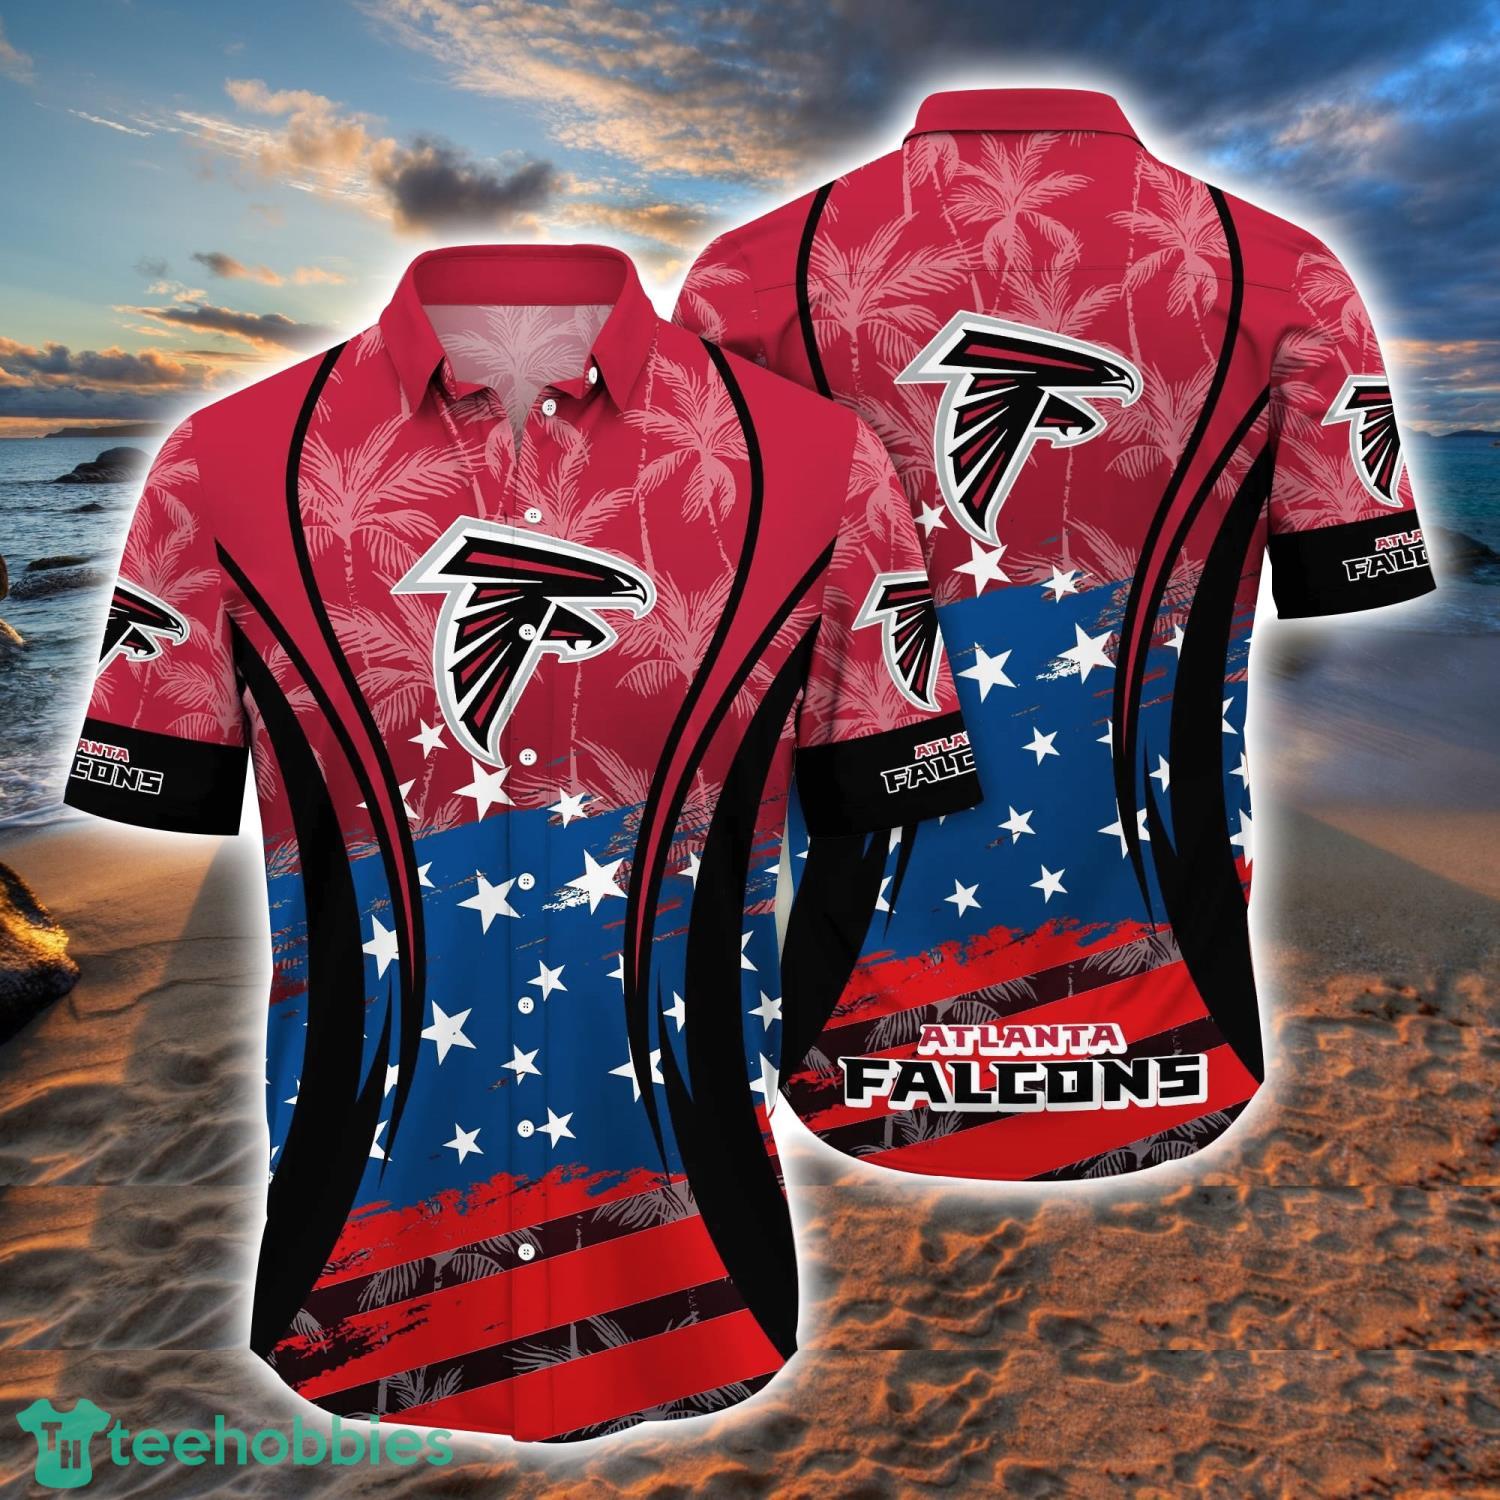 Atlanta Falcons Tropical Hibiscus Pattern Trending Summer Gift